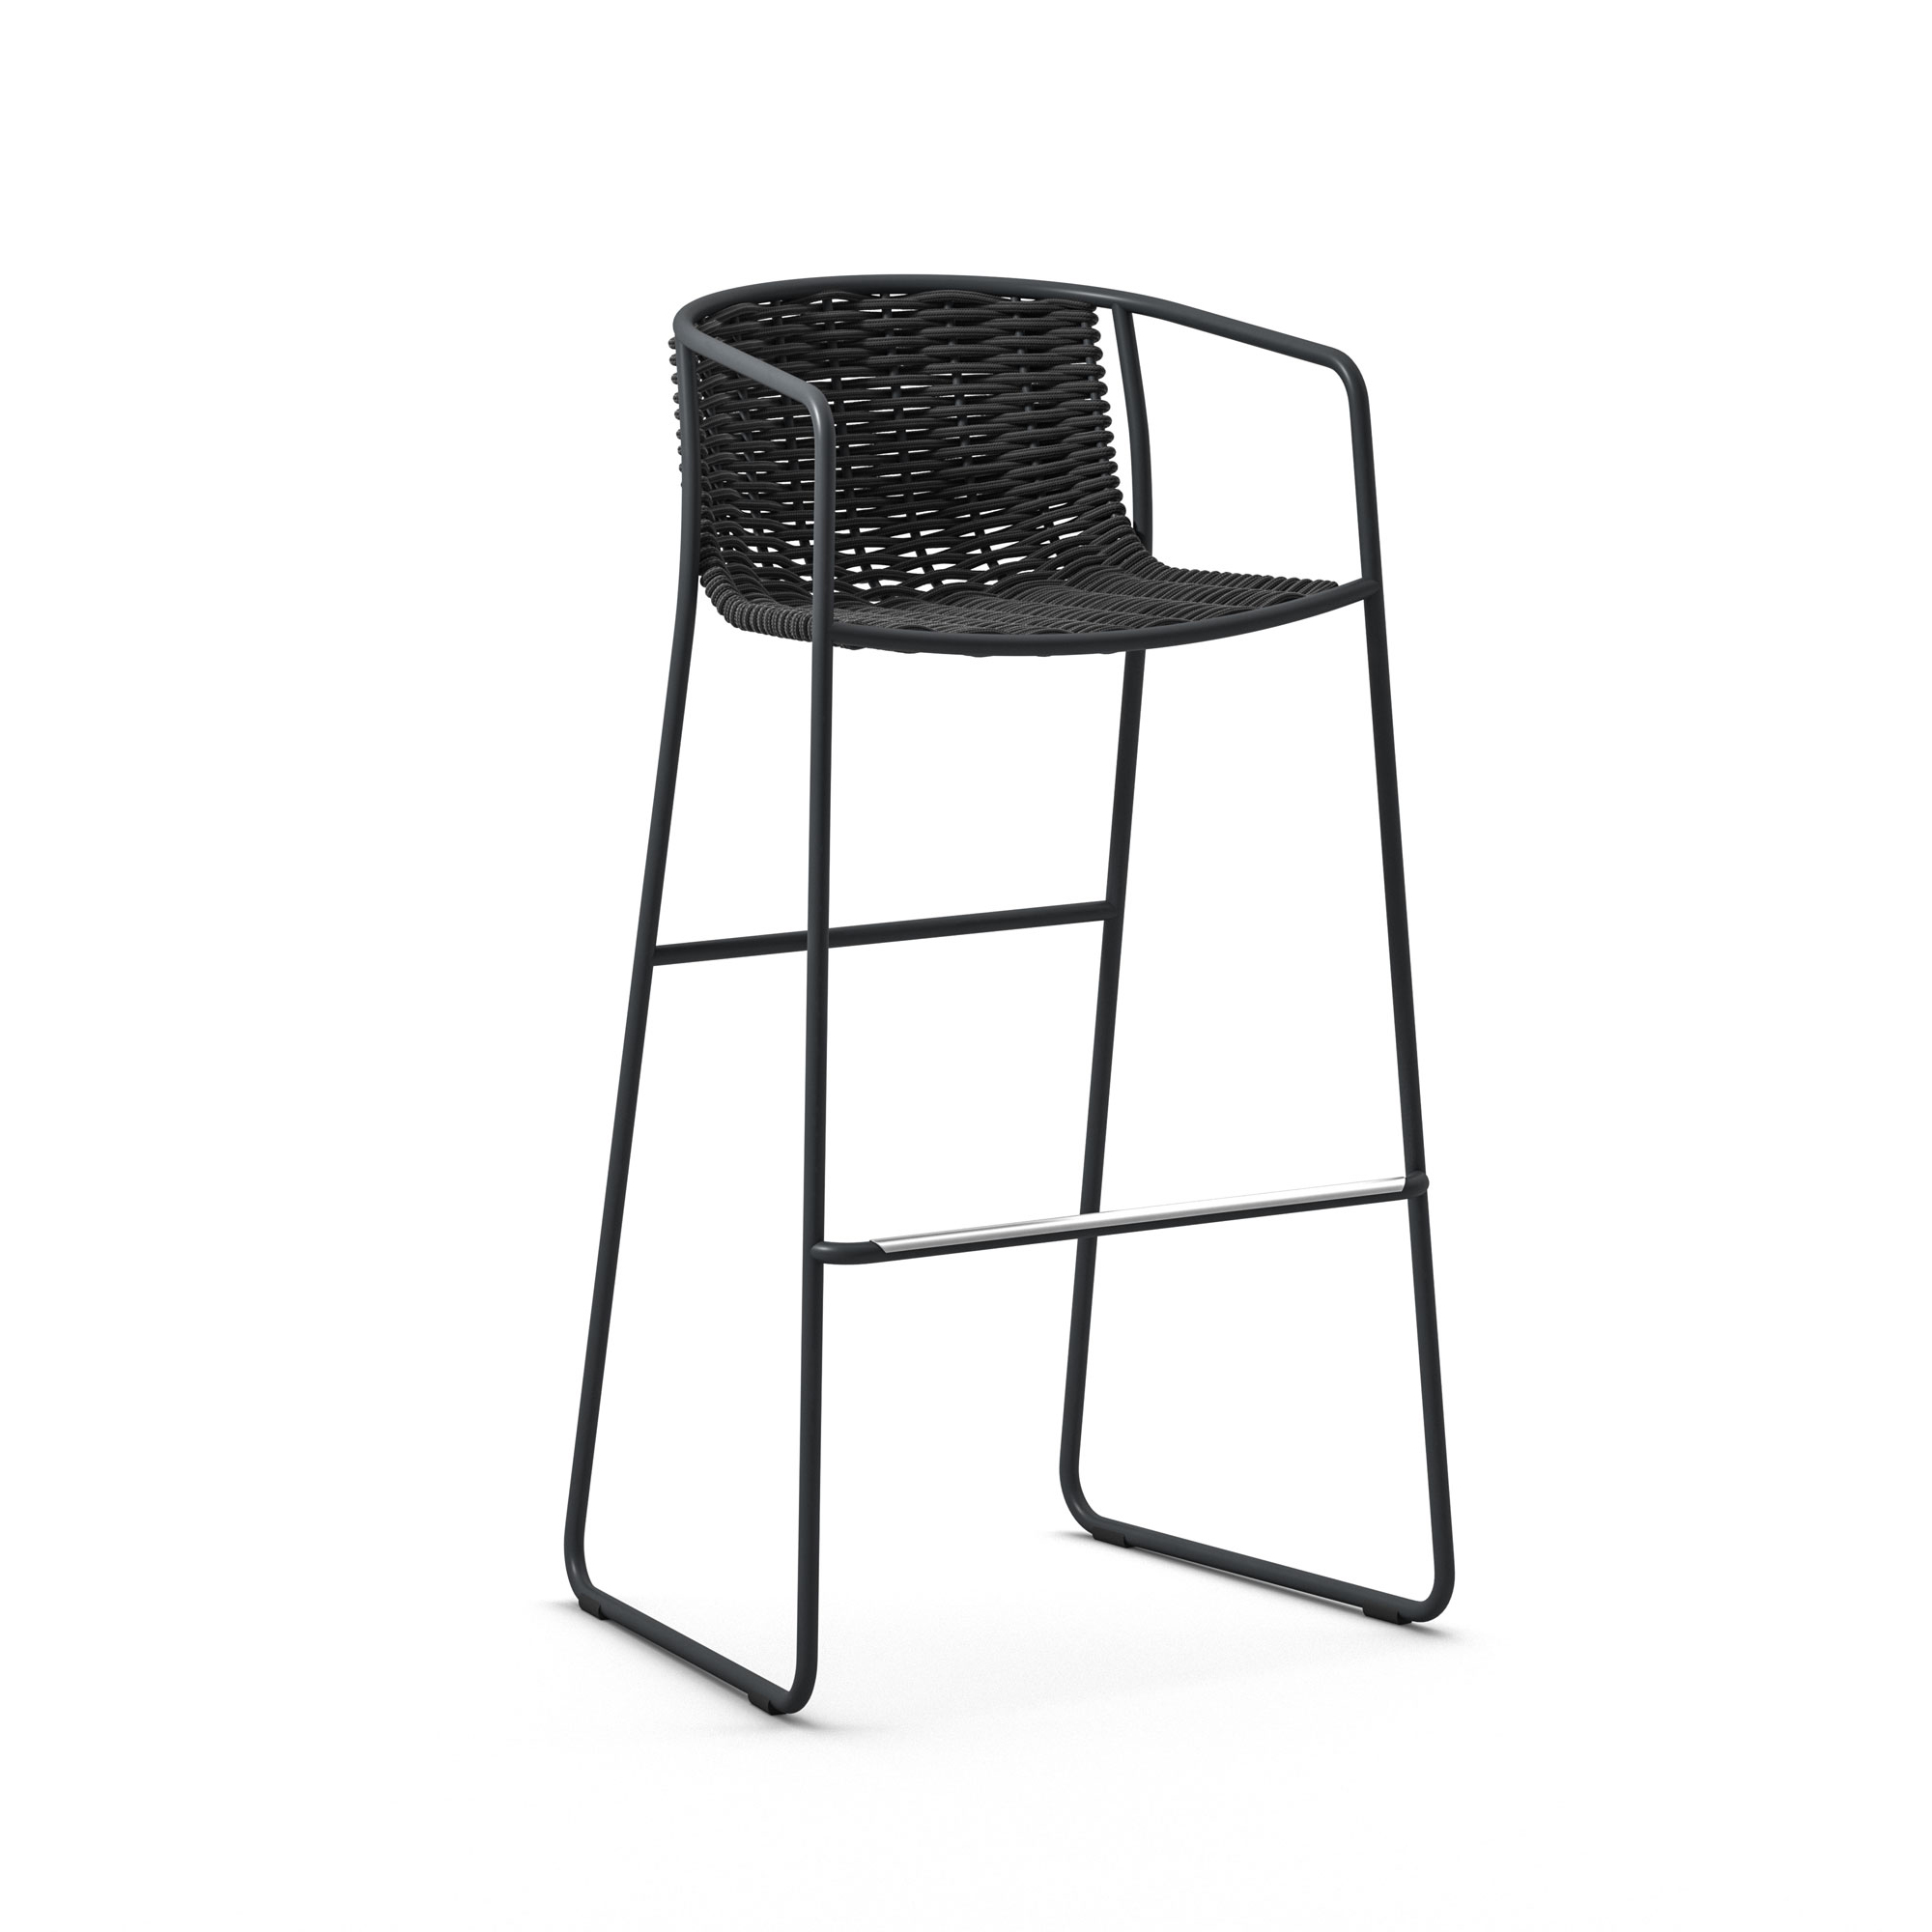 RANDA NUDE - Chairs from Arrmet srl | Architonic